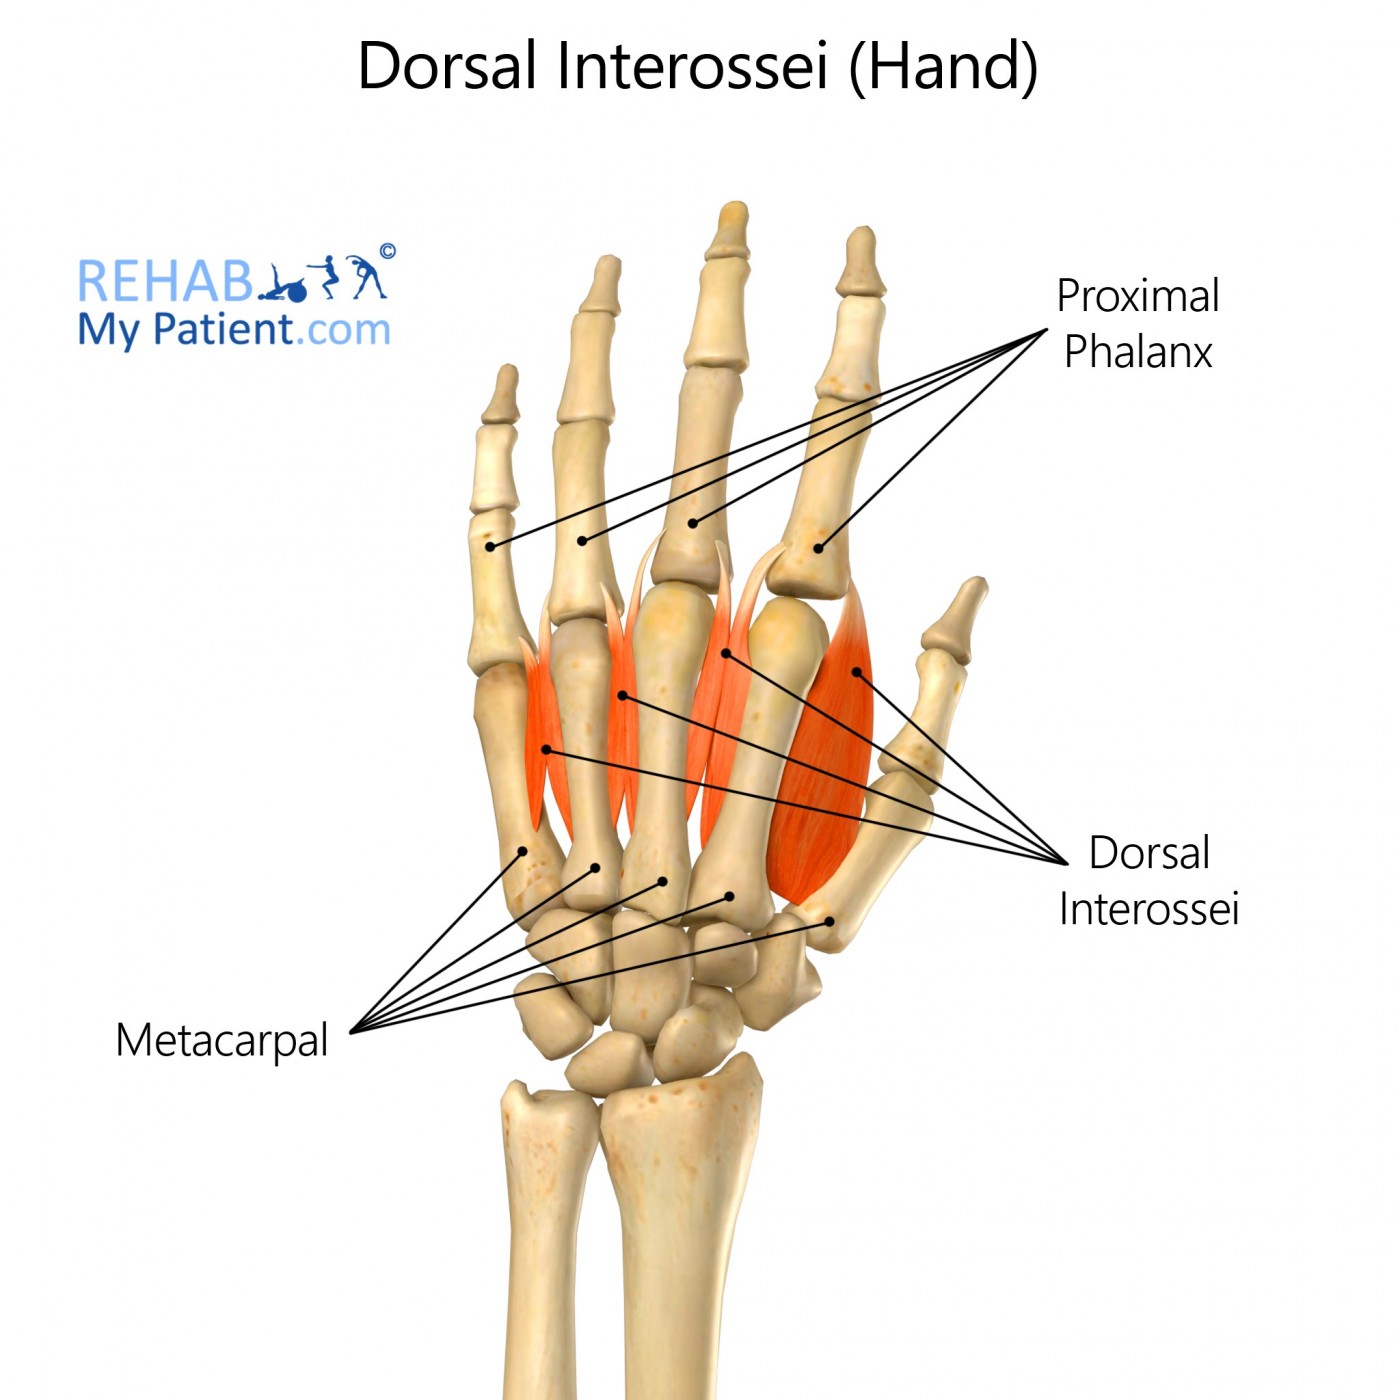 Dorsal Interossei of the hand